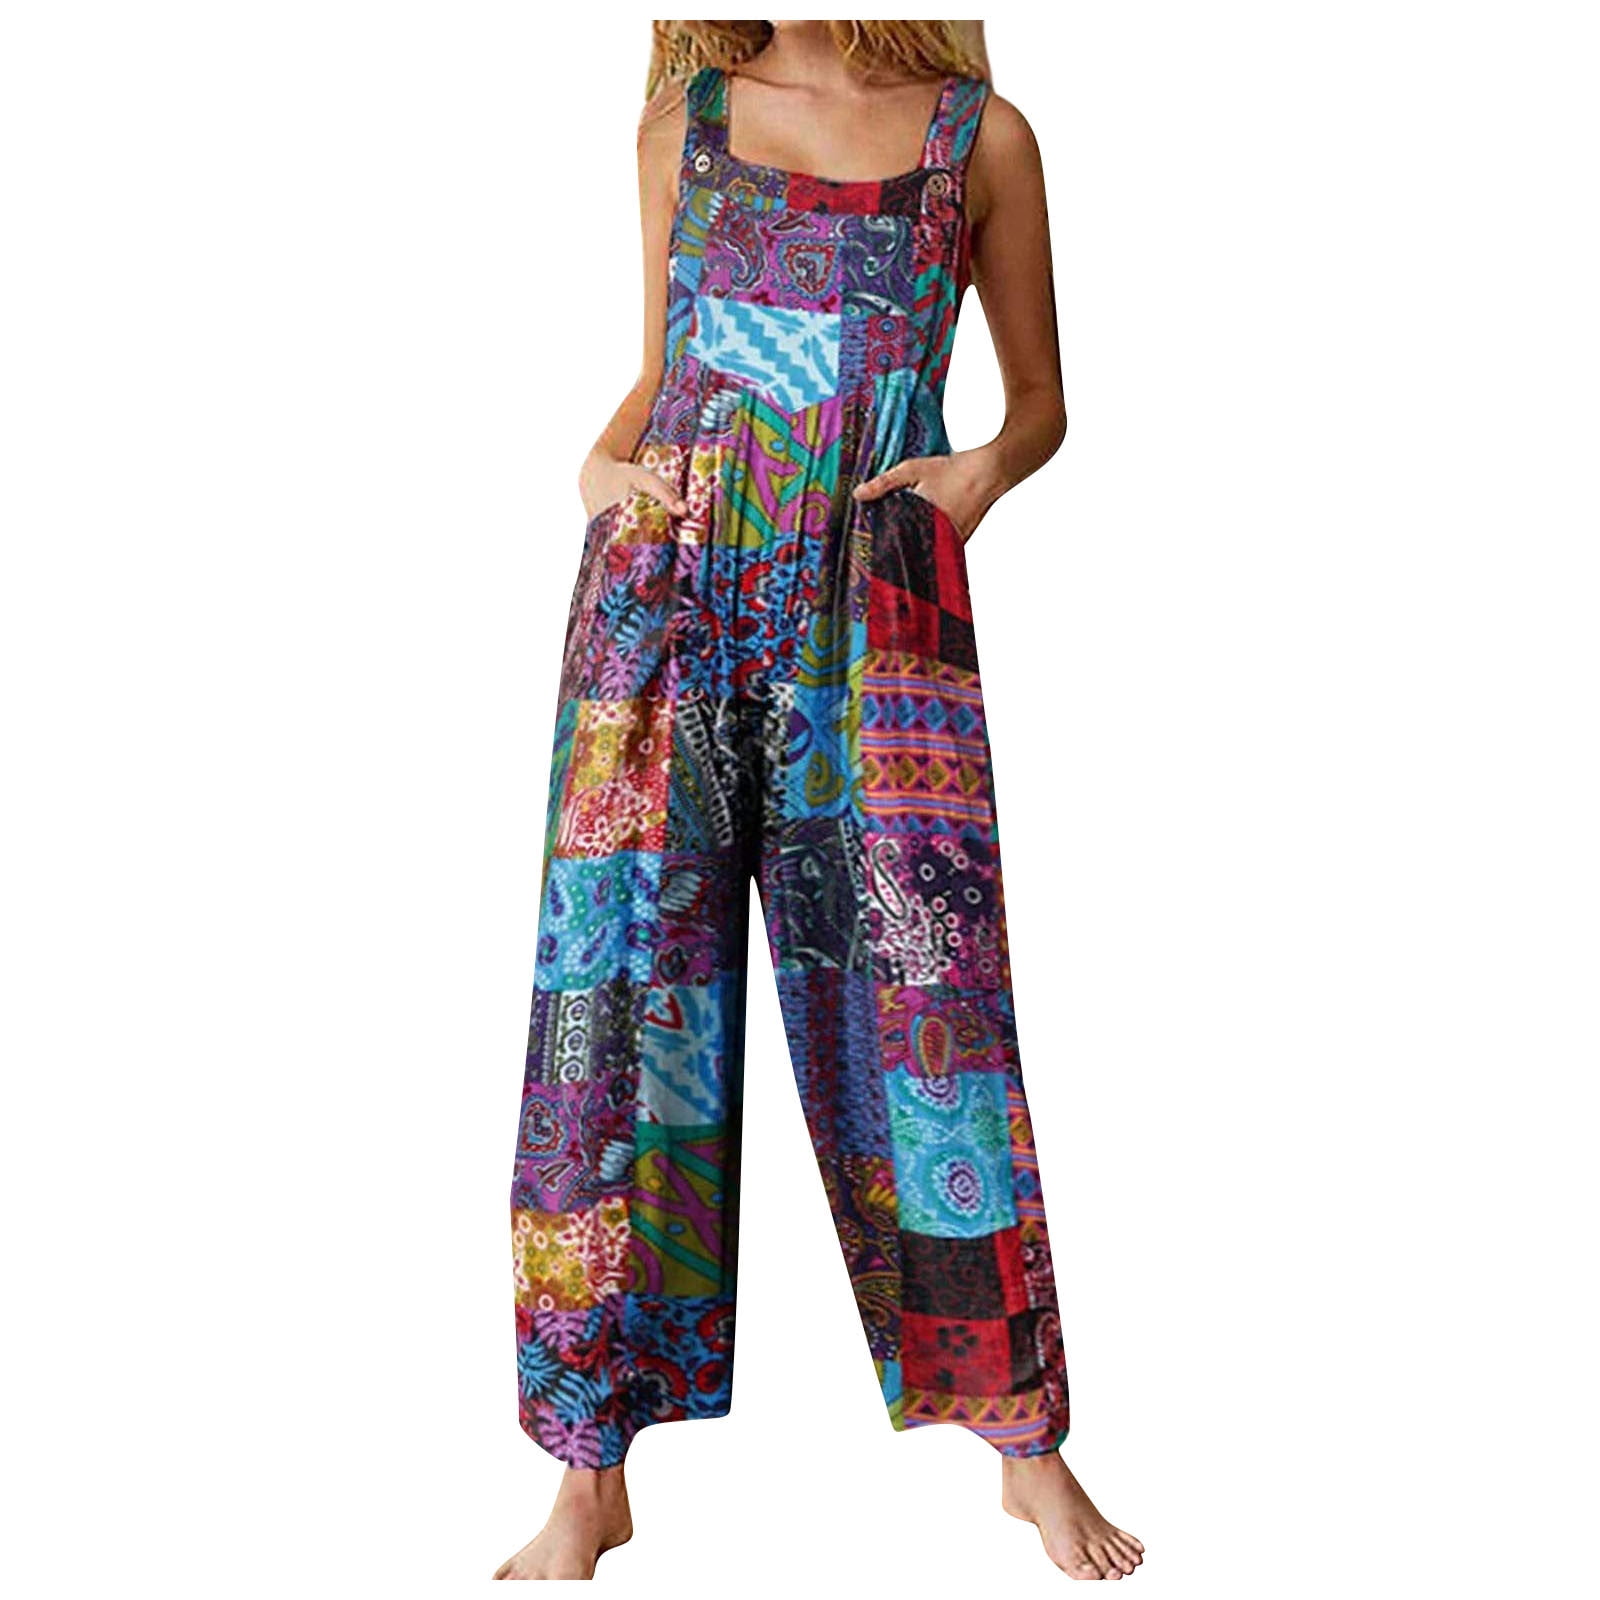 Kddylitq Women's Jumpsuits Summer Fashion Floral Print Insert Pockets ...